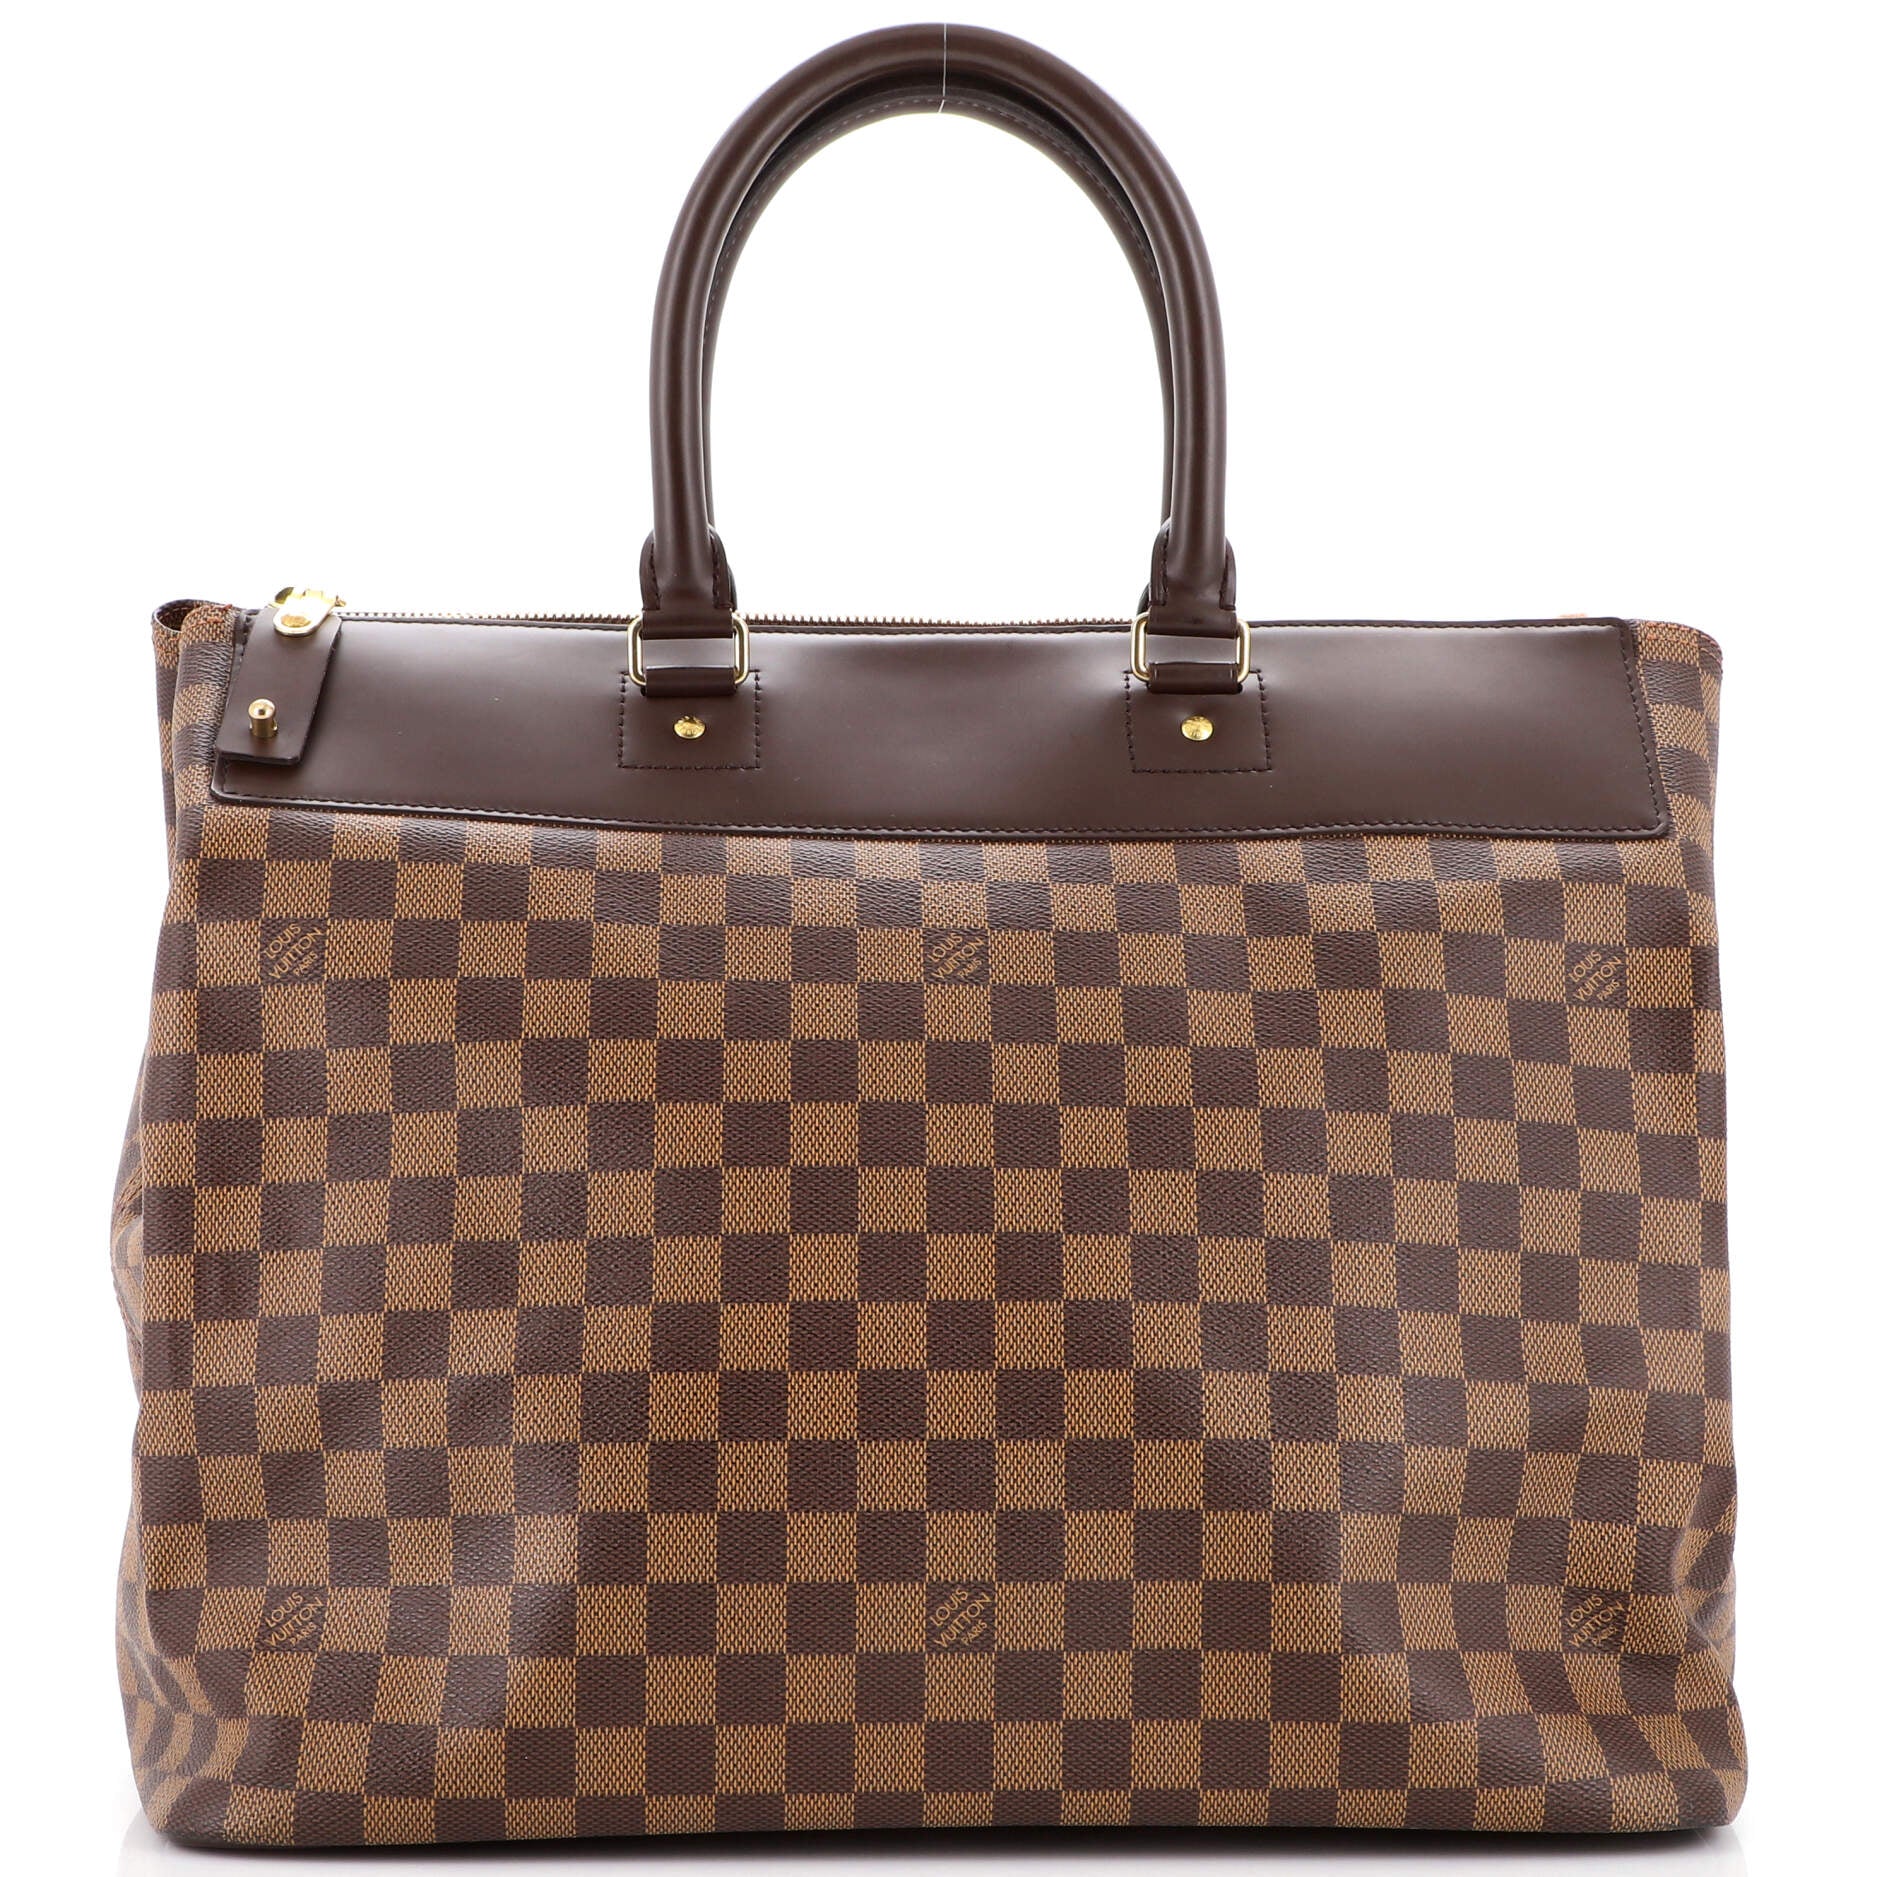 Louis Vuitton Greenwich Damier Graphite, Luxury, Bags & Wallets on